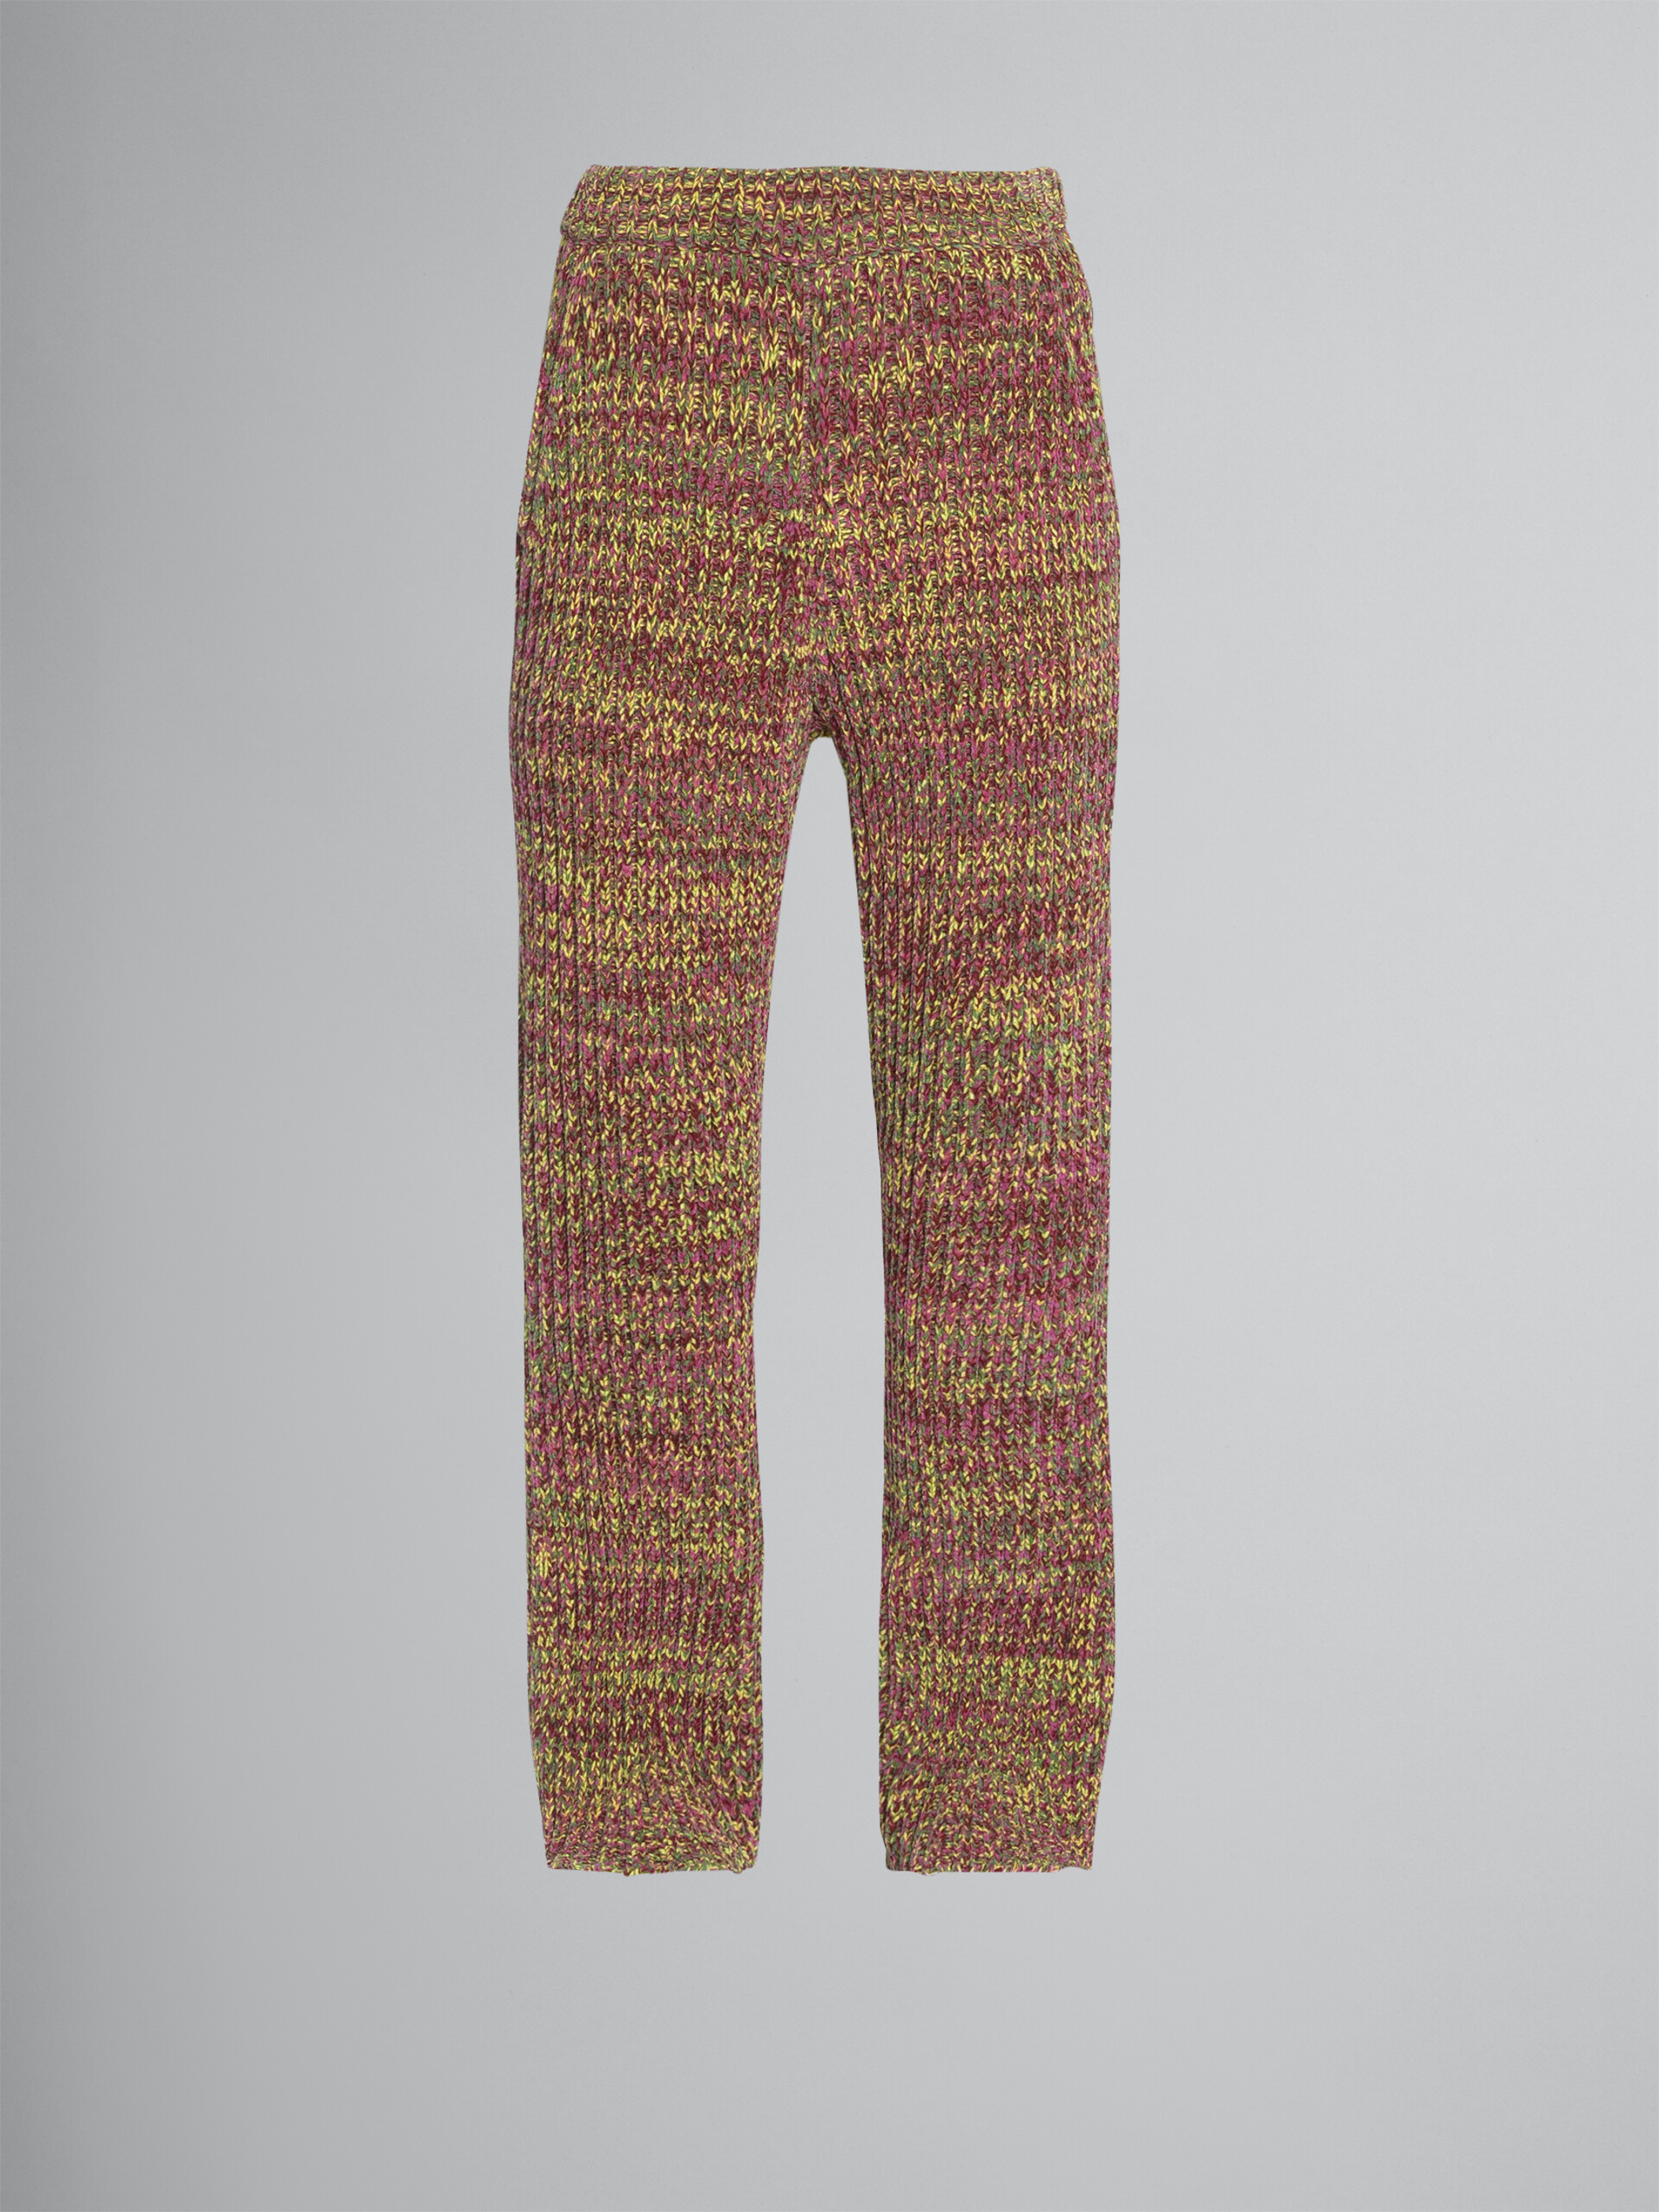 Viscose and cotton chenille pants - Pants - Image 1